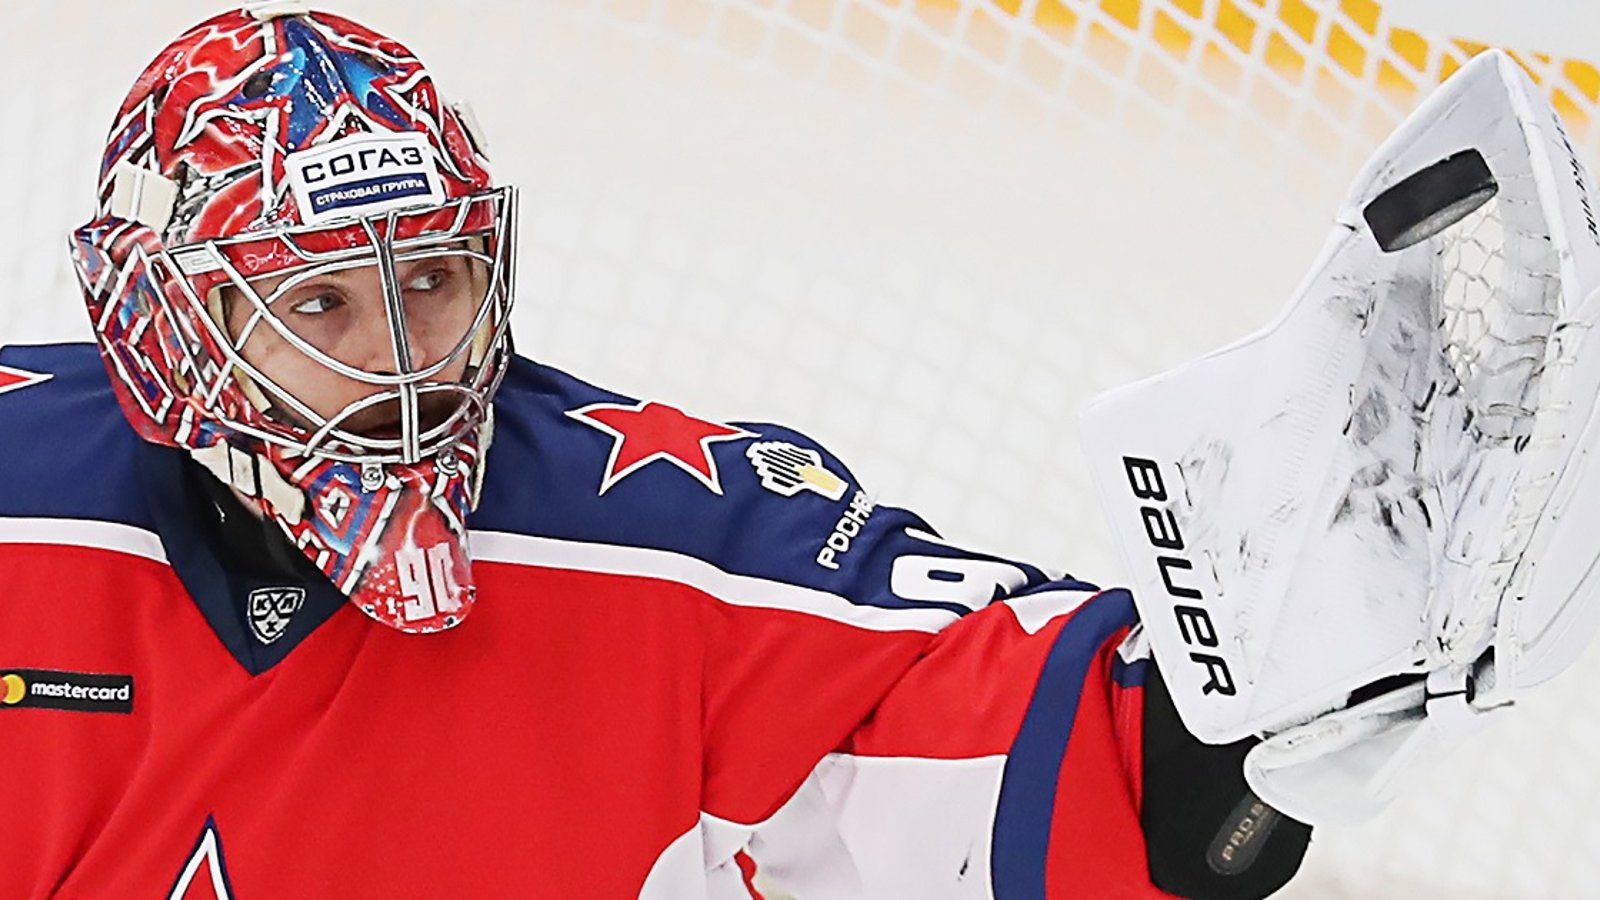 KHL star goaltender Ilya Sorokin is coming to the NHL.